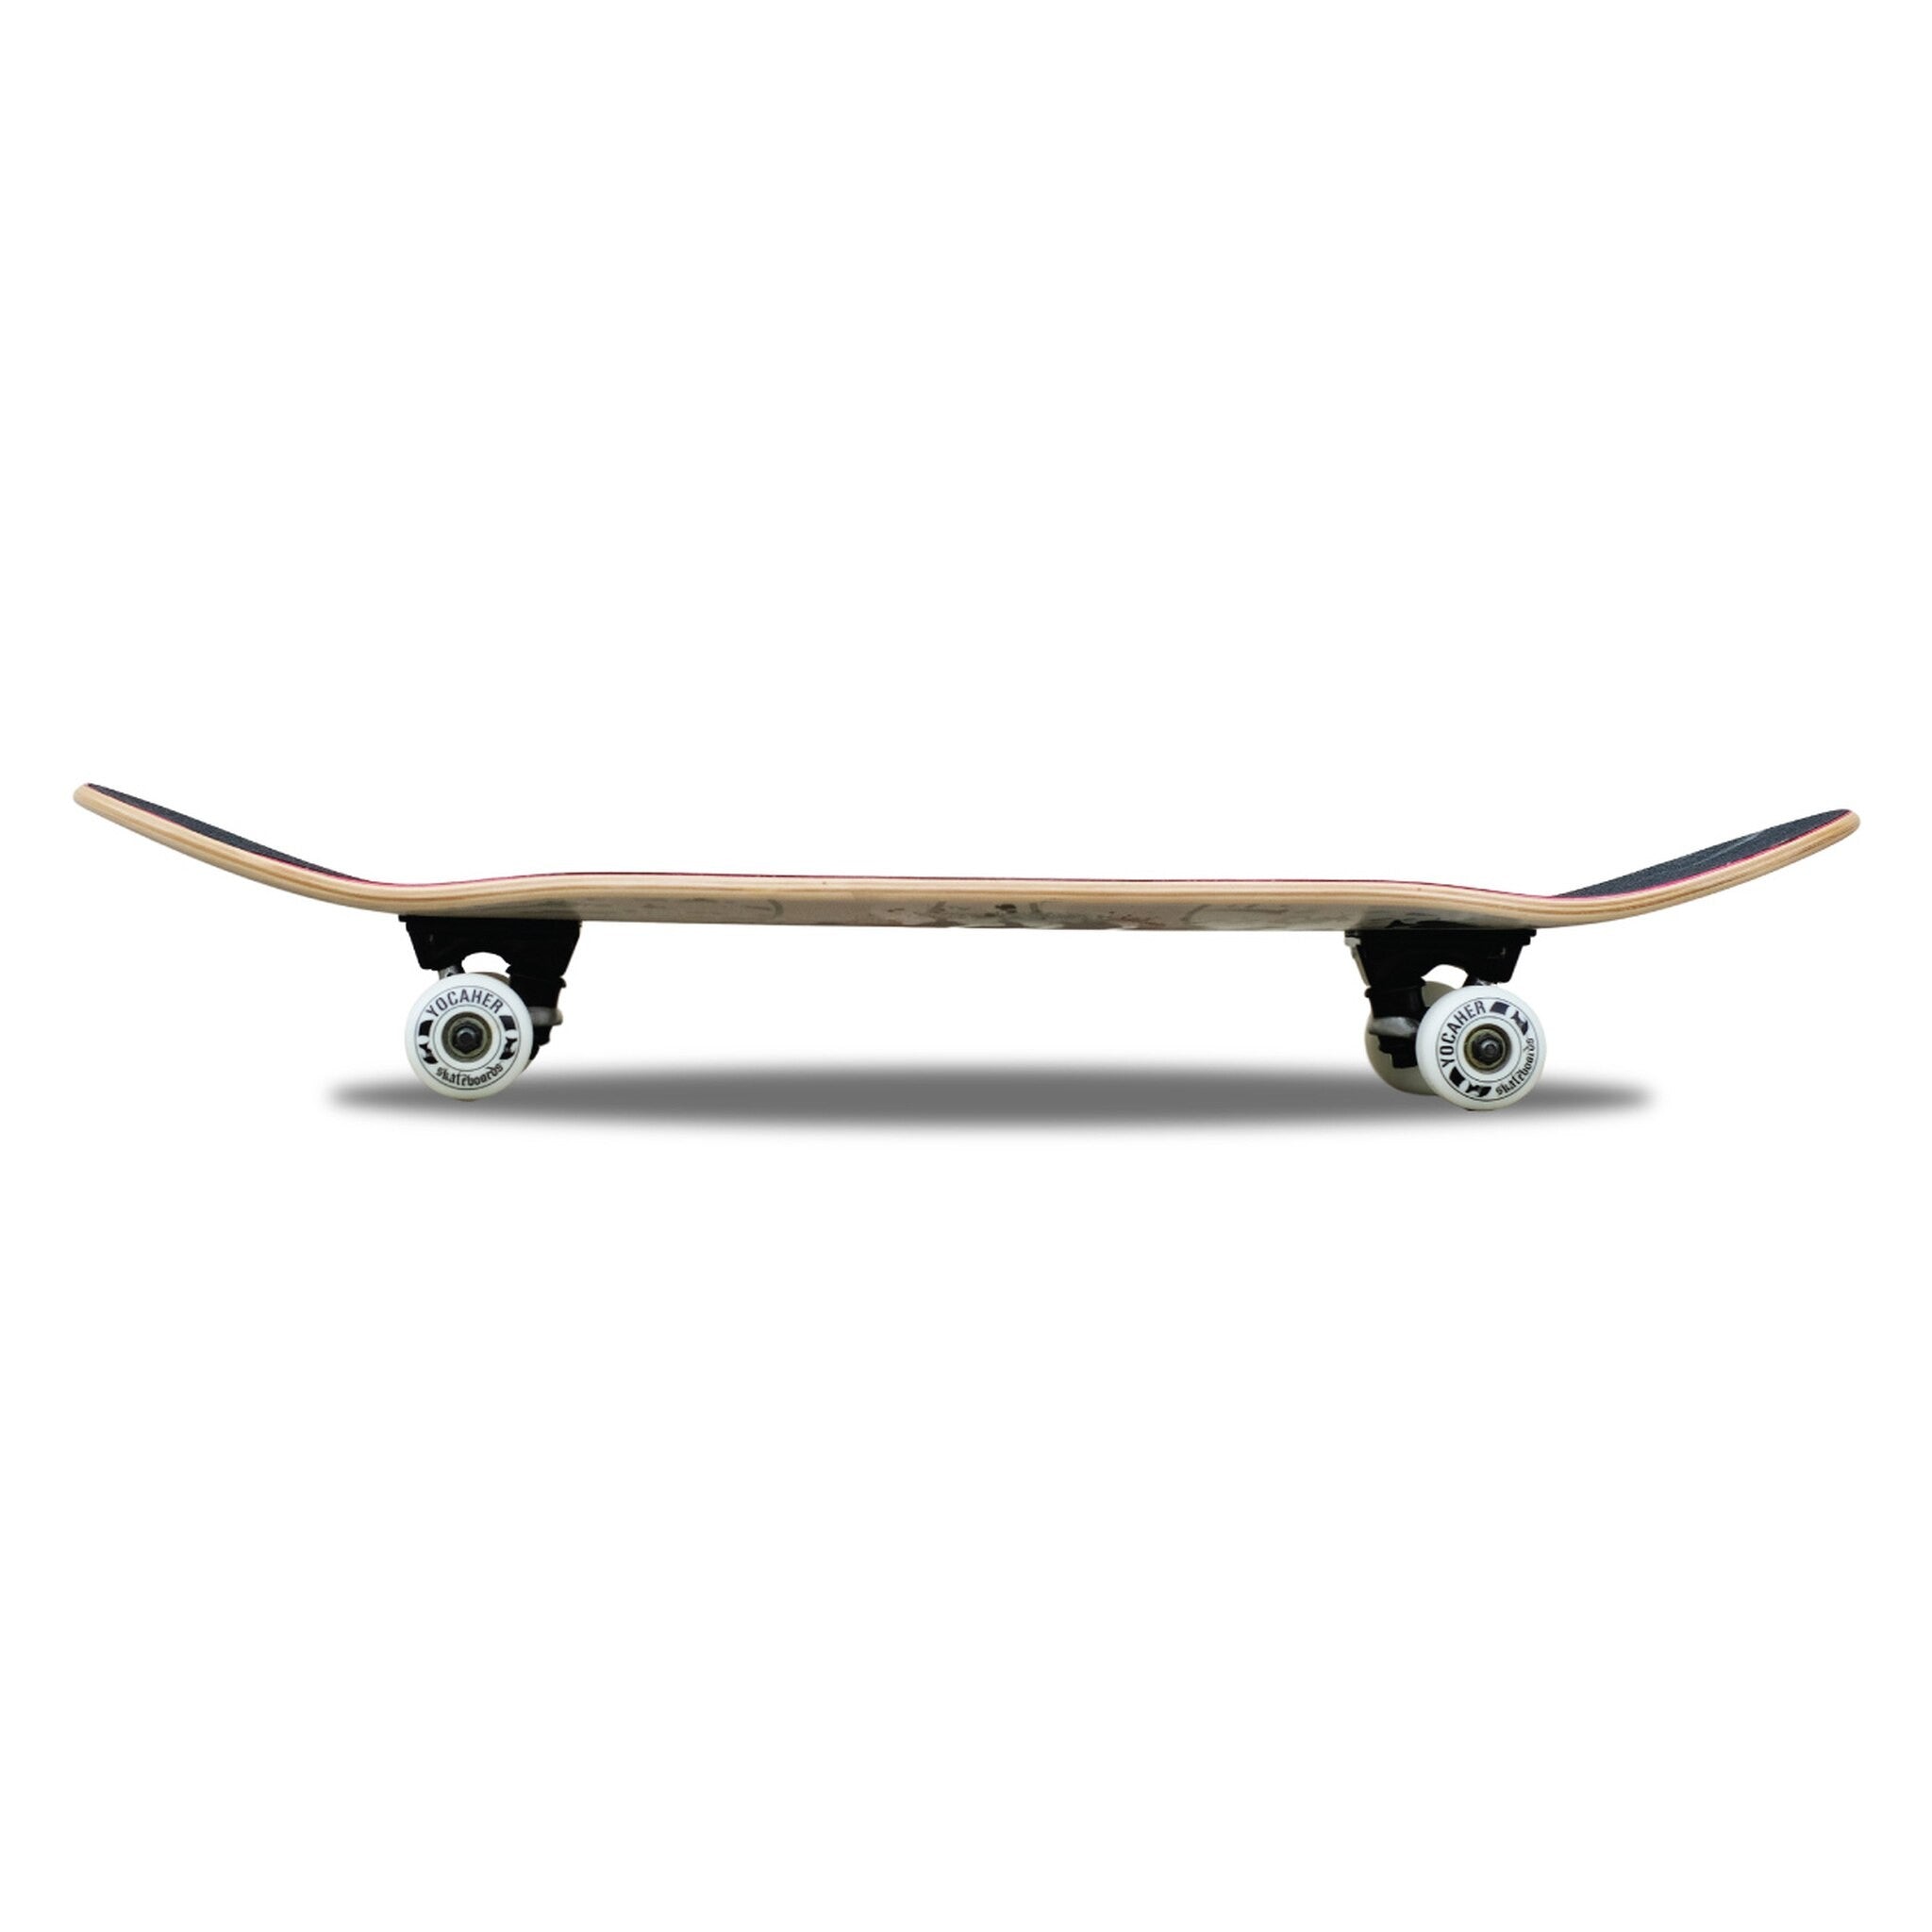 YOCAHER Doug Brown - Street Skateboard - Complete Deck